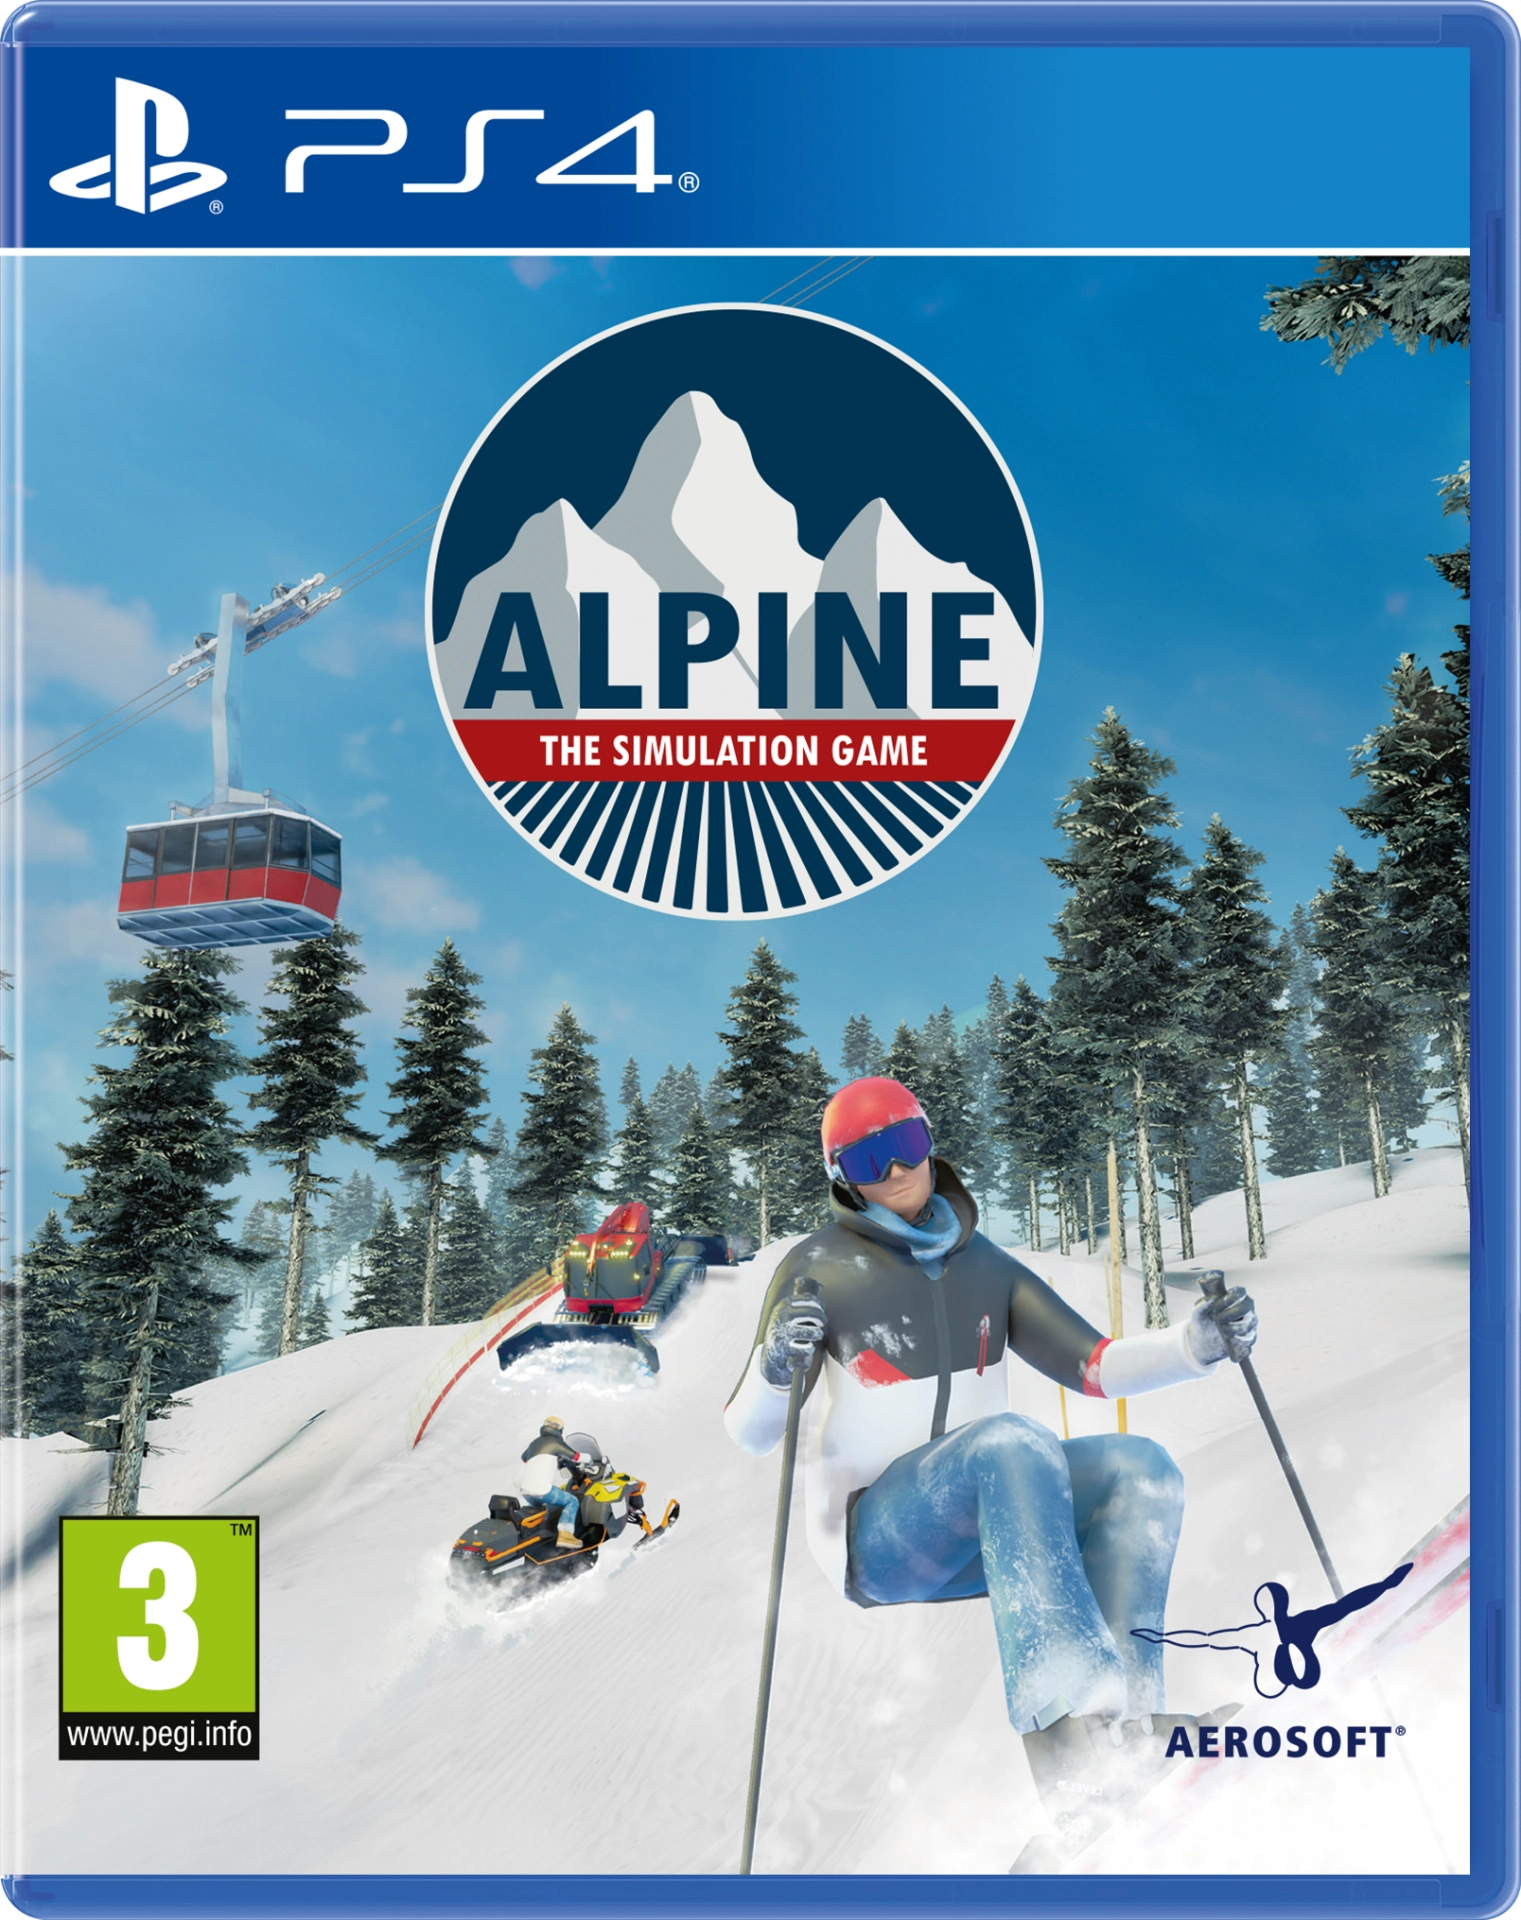 Alpine - The Simulation Game (PS4), Aerosoft